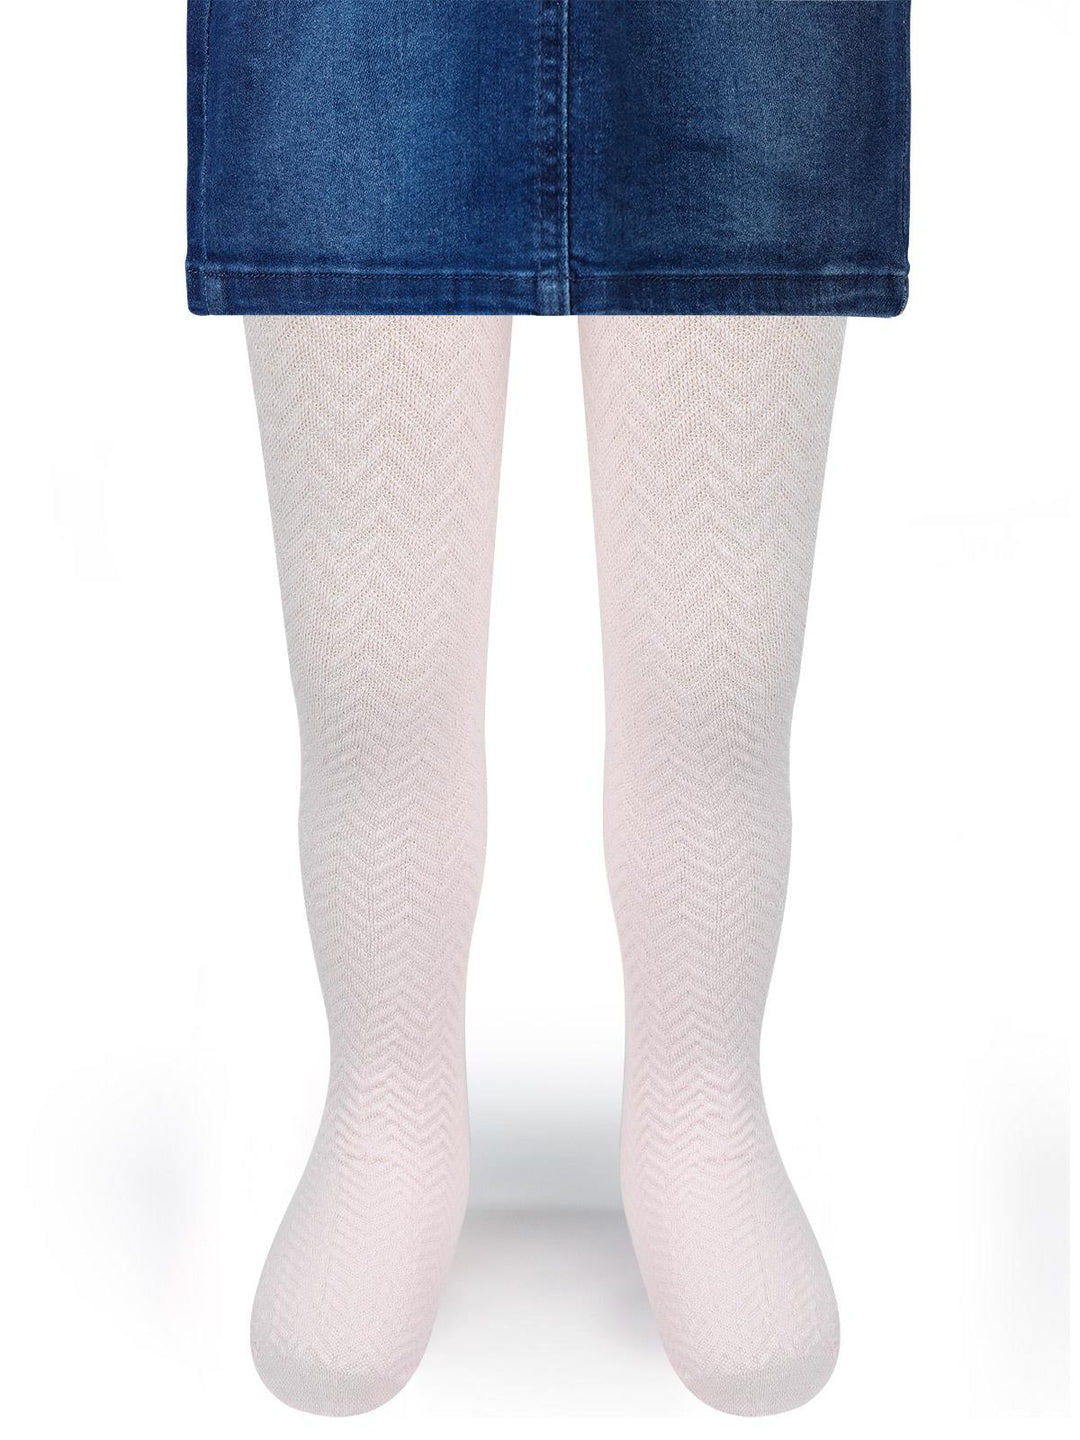 Civil Girls Cotton Legging #1022 (W-21)